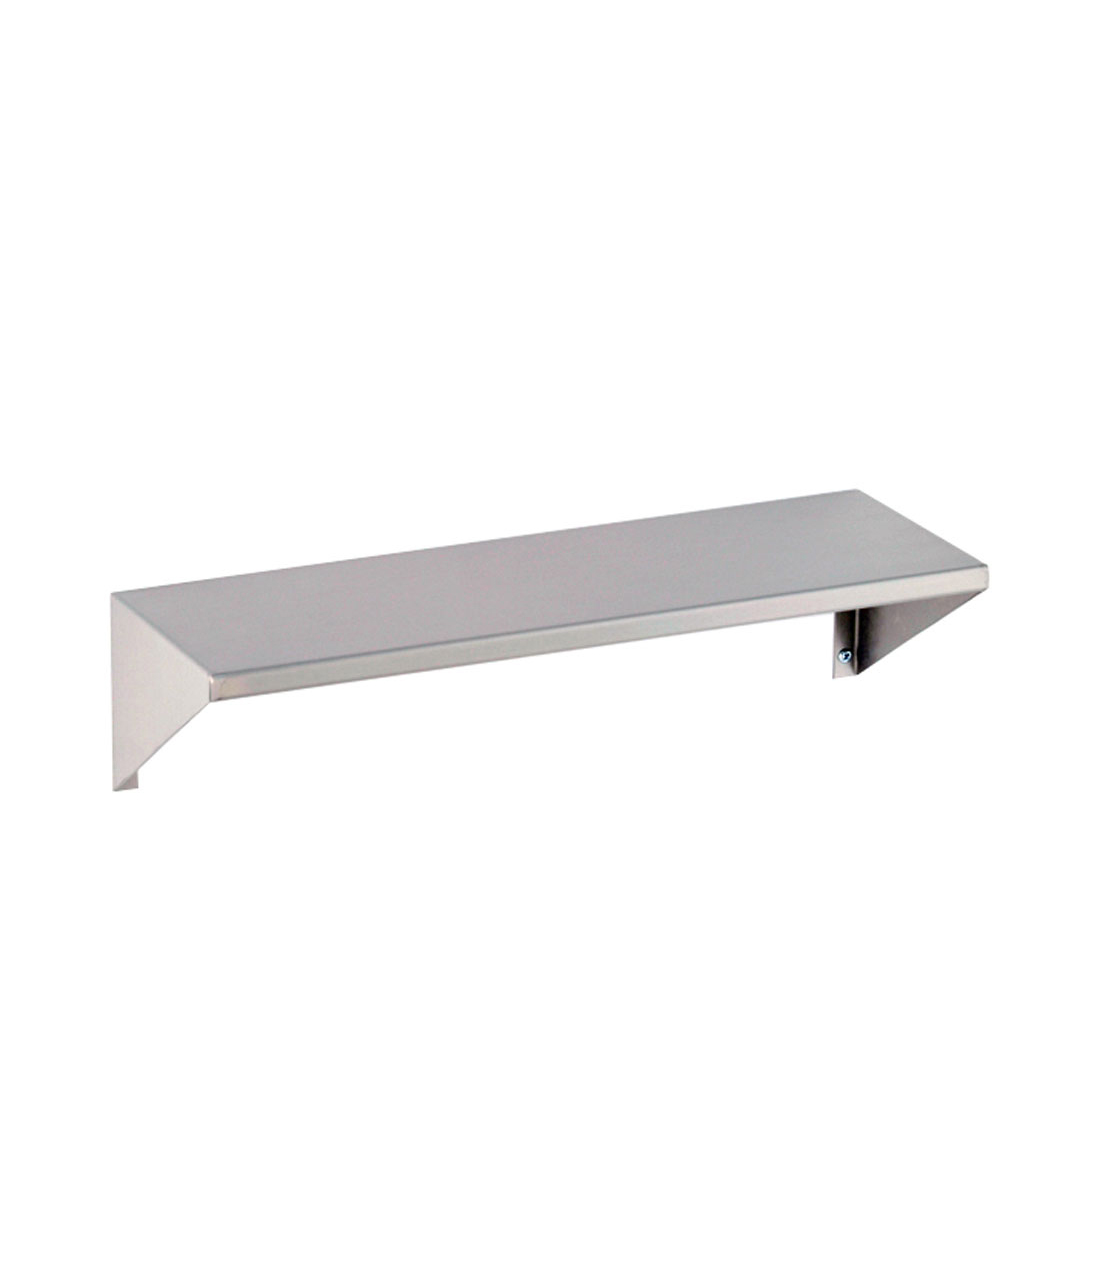 Stainless Steel Shelf - (Model #: s-8-series) Image